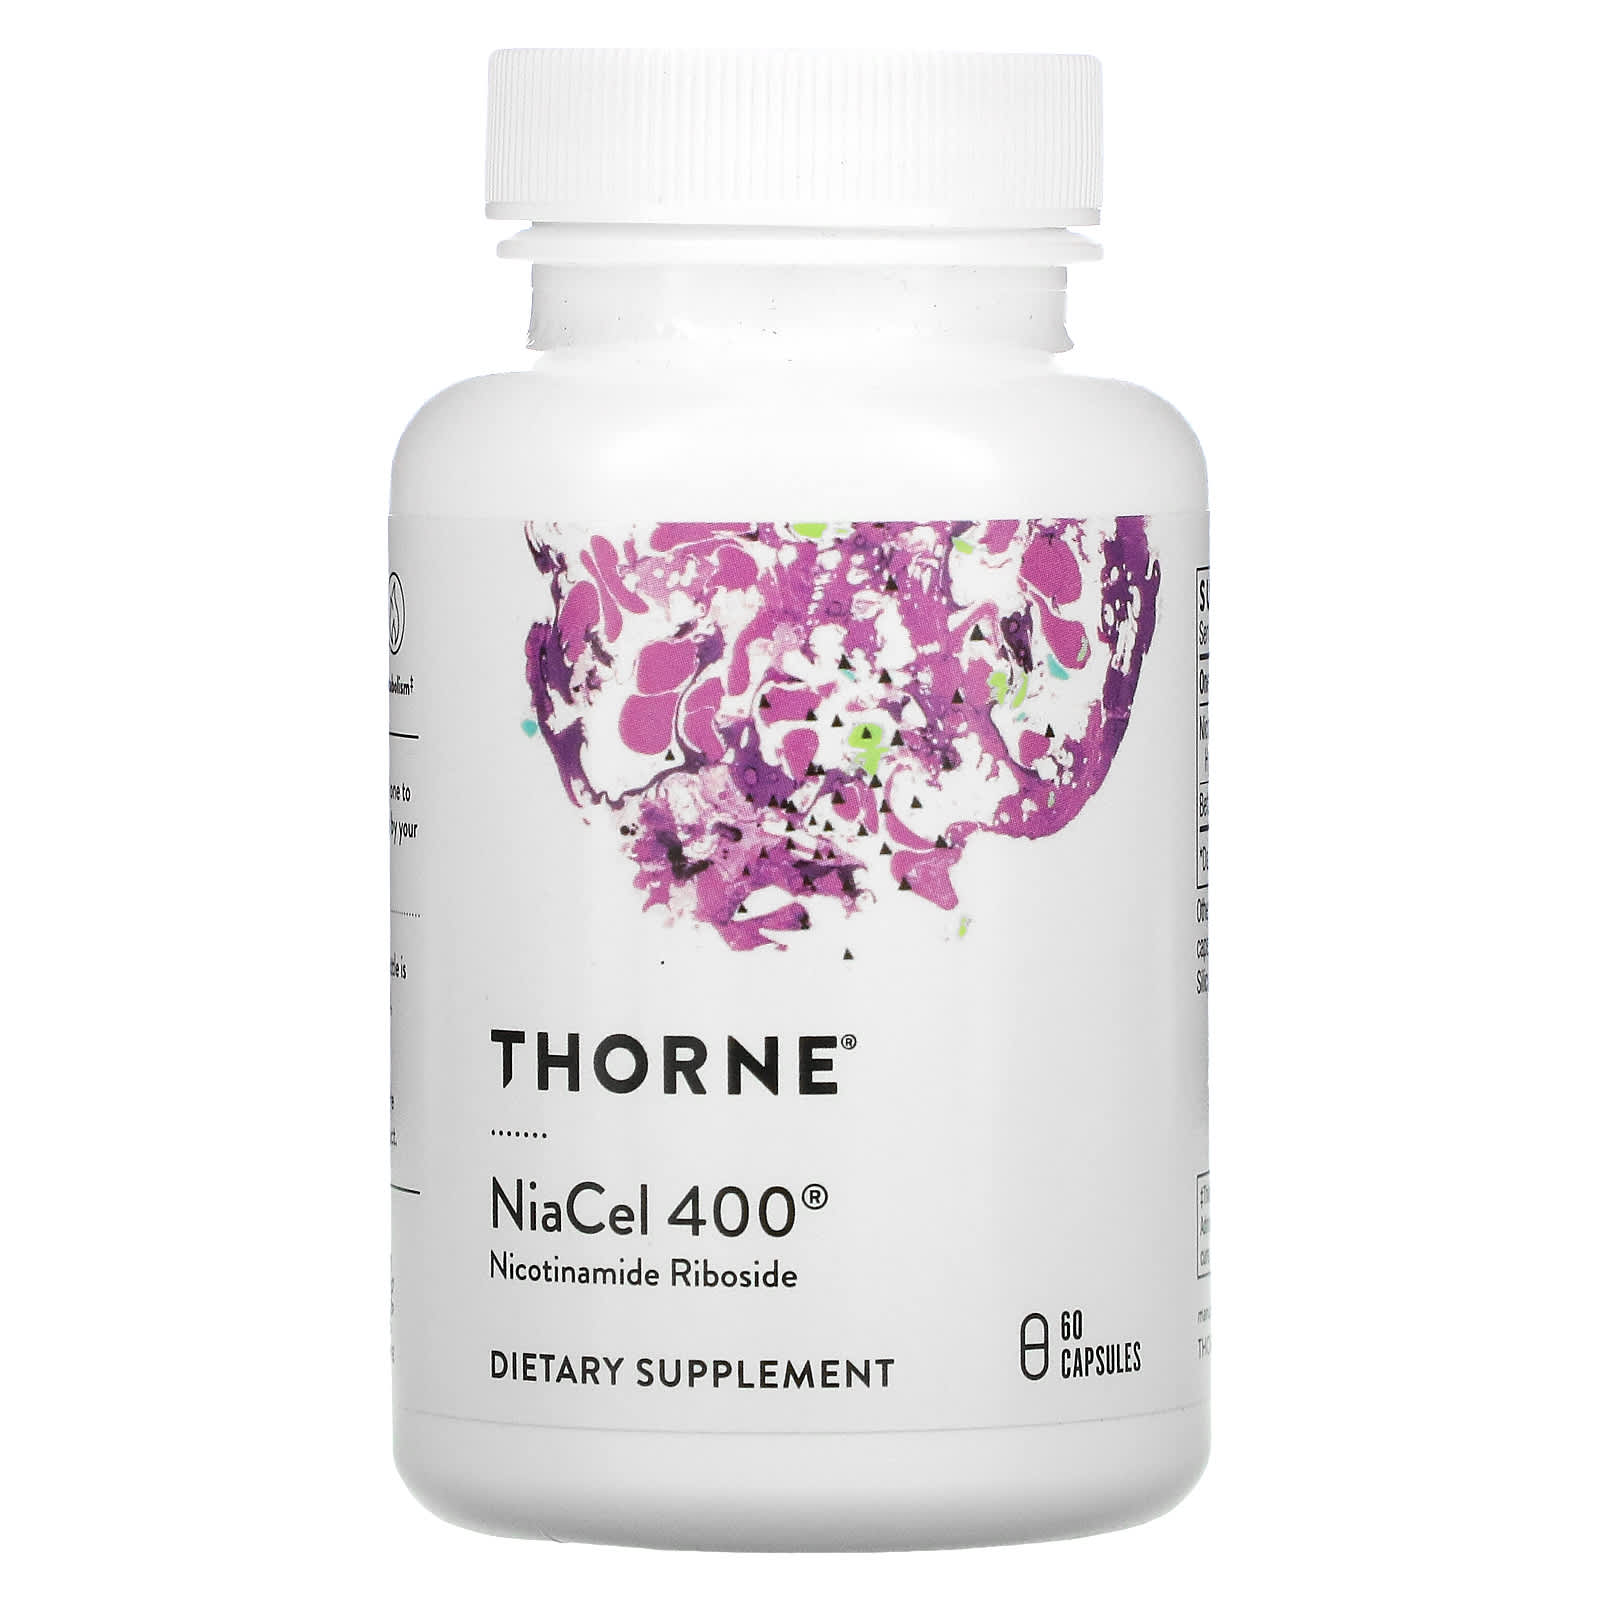 Пищевая Добавка Thorne NiaCel 400, 60 капсул thorne research niacel 400 60 капсул